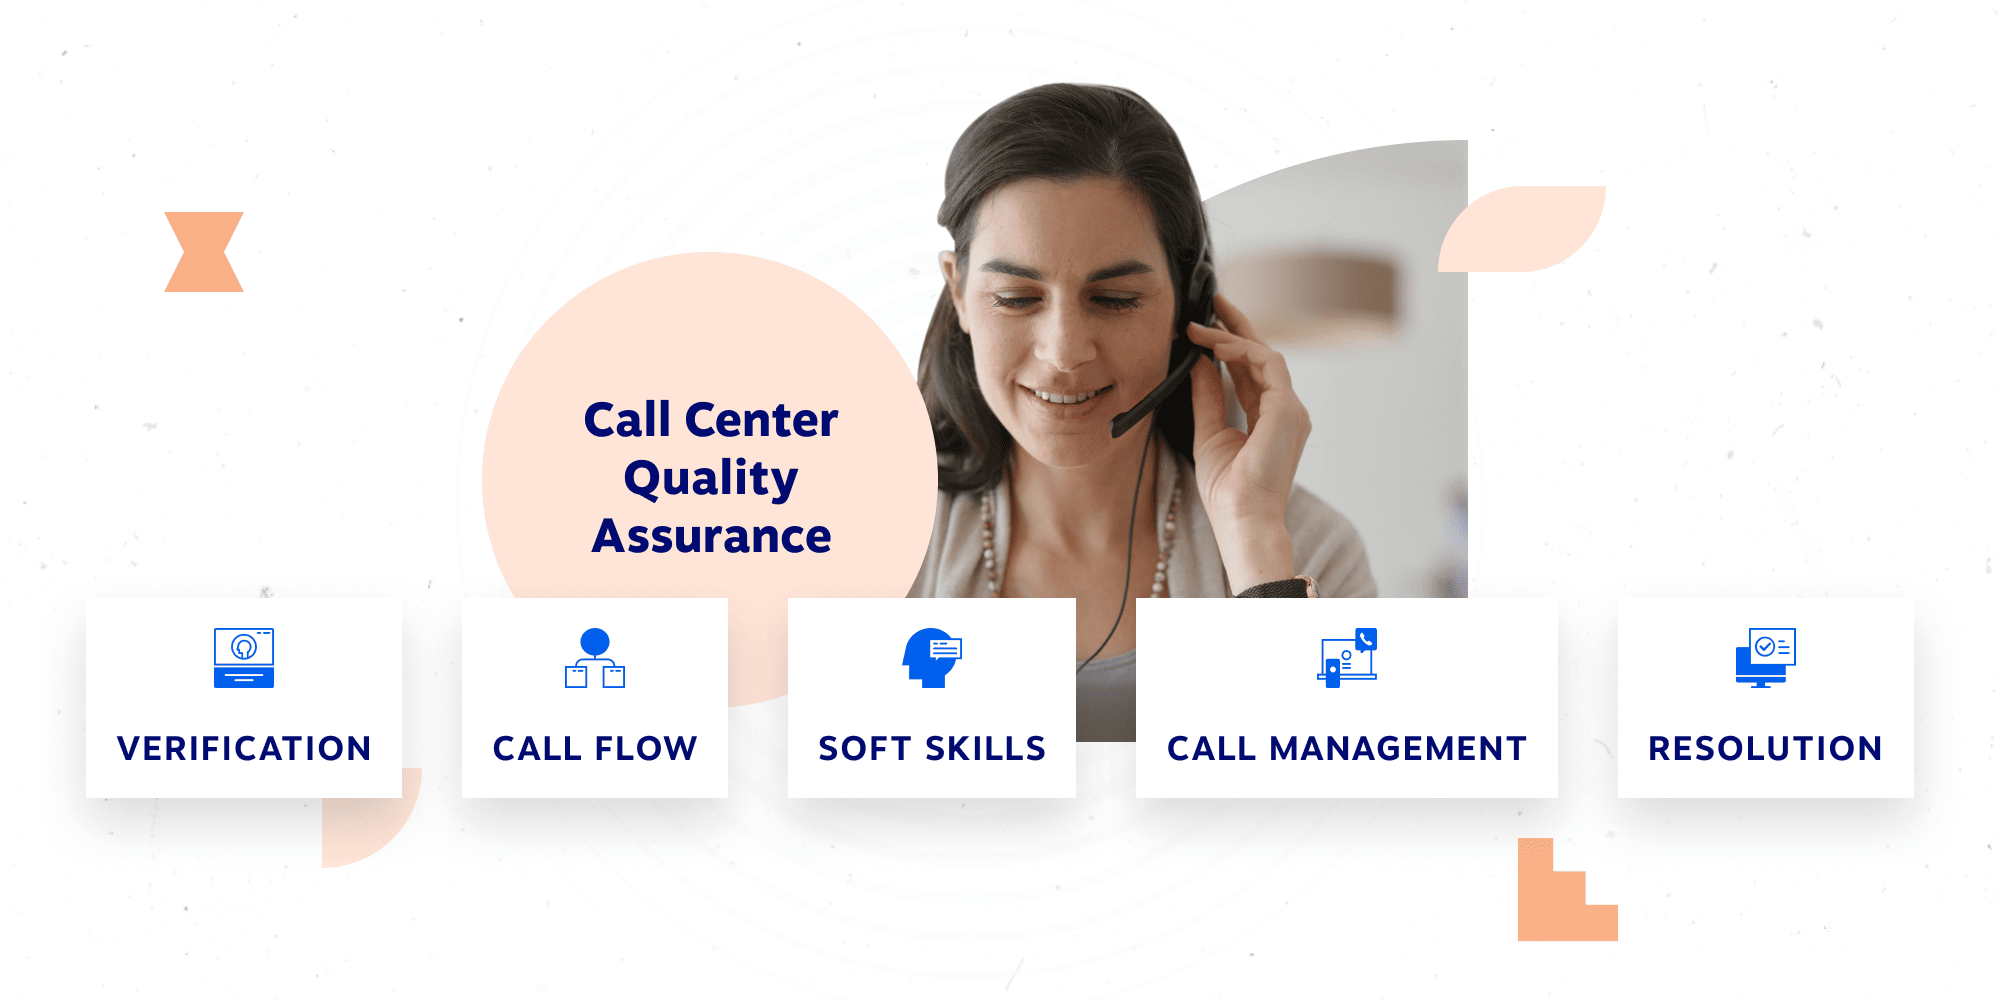 Primary responsibilities of call center QA.